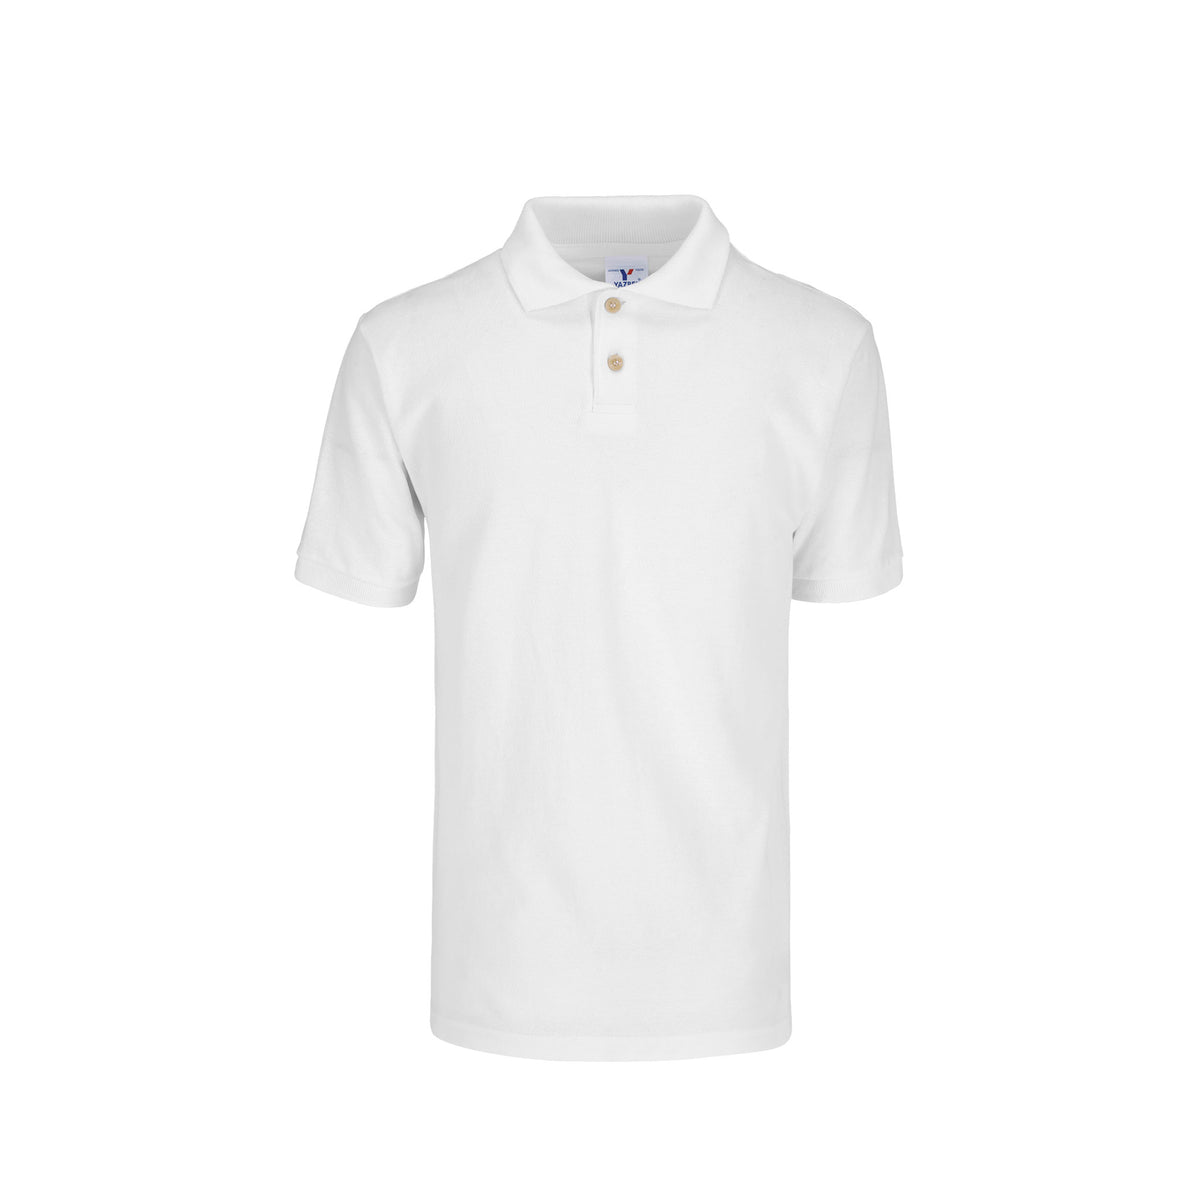 Youth’s Unisex Sport Shirt (White) – Yazbek USA Mint